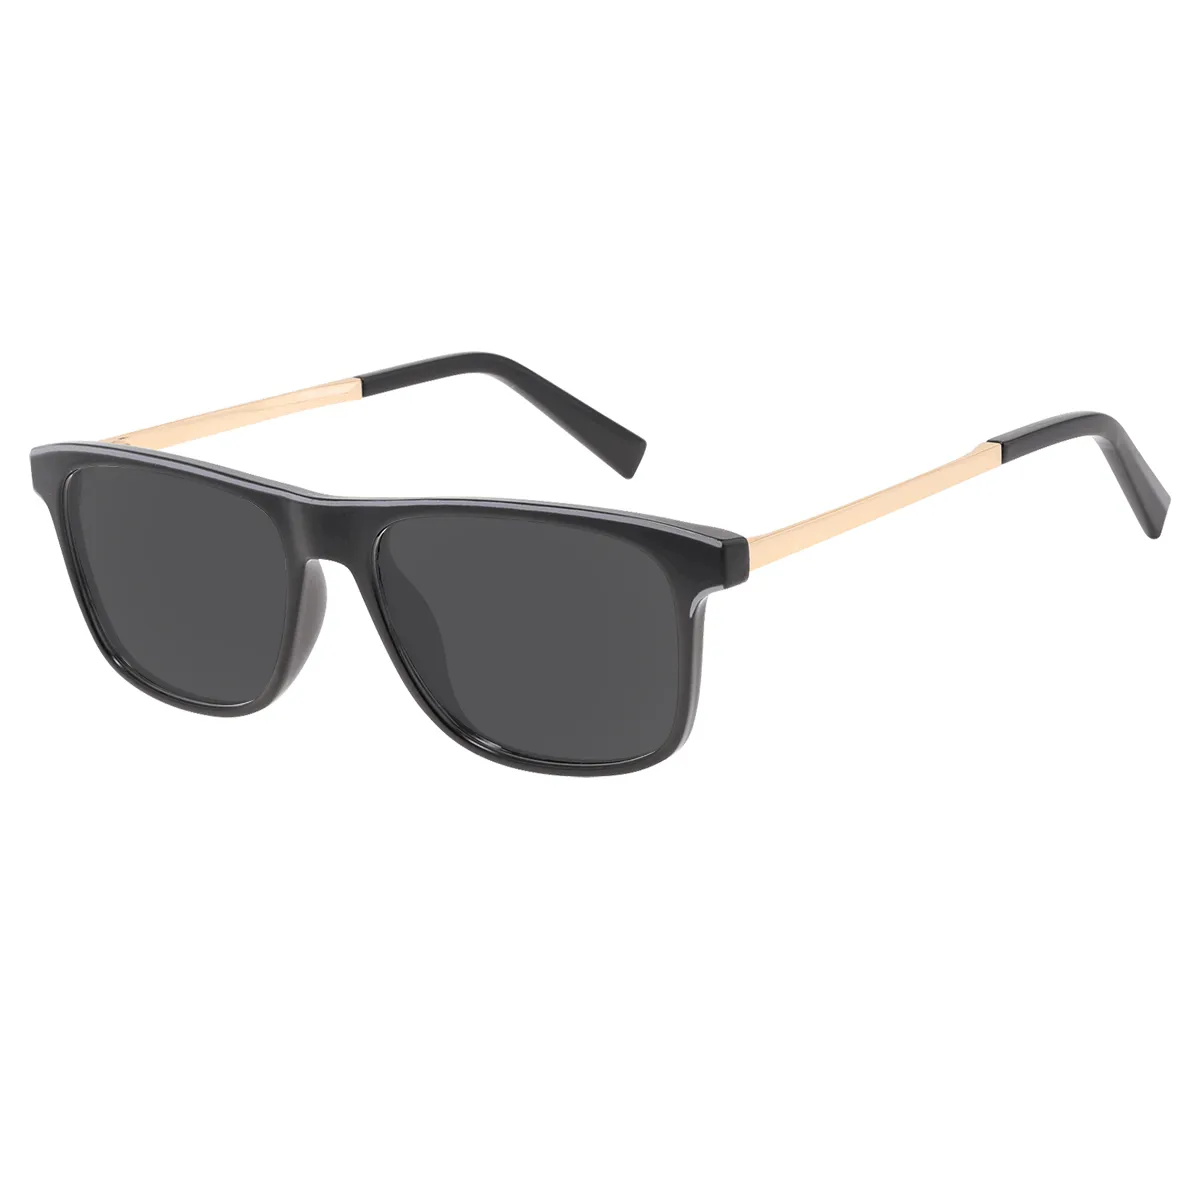 Yarbrough - Browline Black/Gold Sunglasses for Men & Women